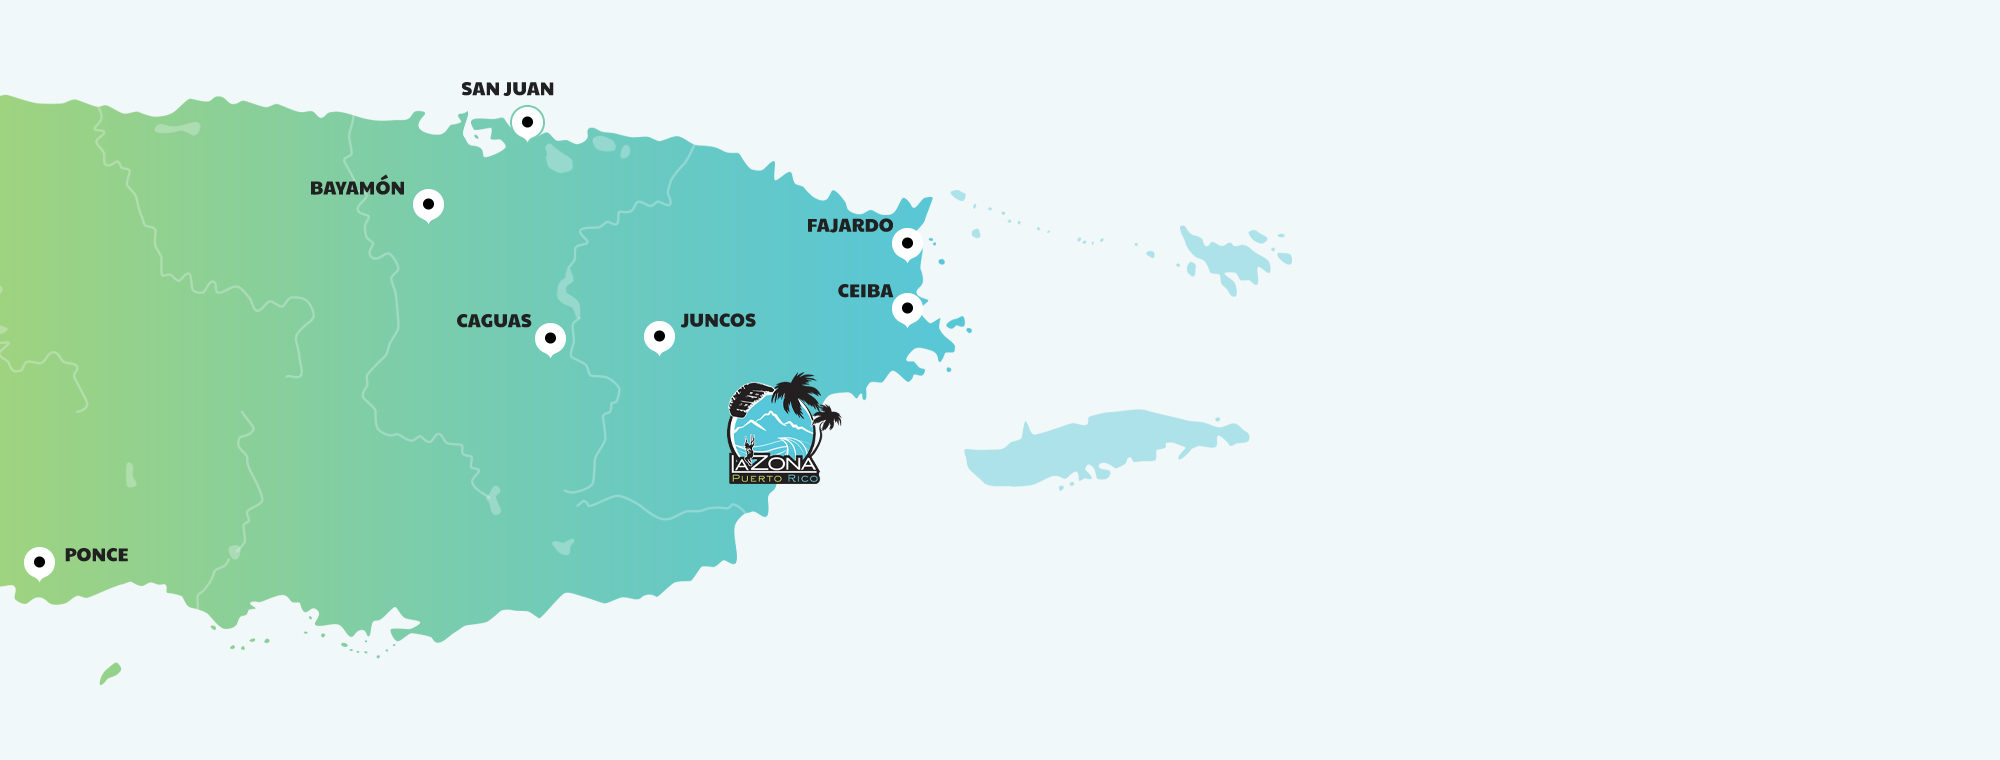 La Zona Puerto Rico Skydiving proximity map